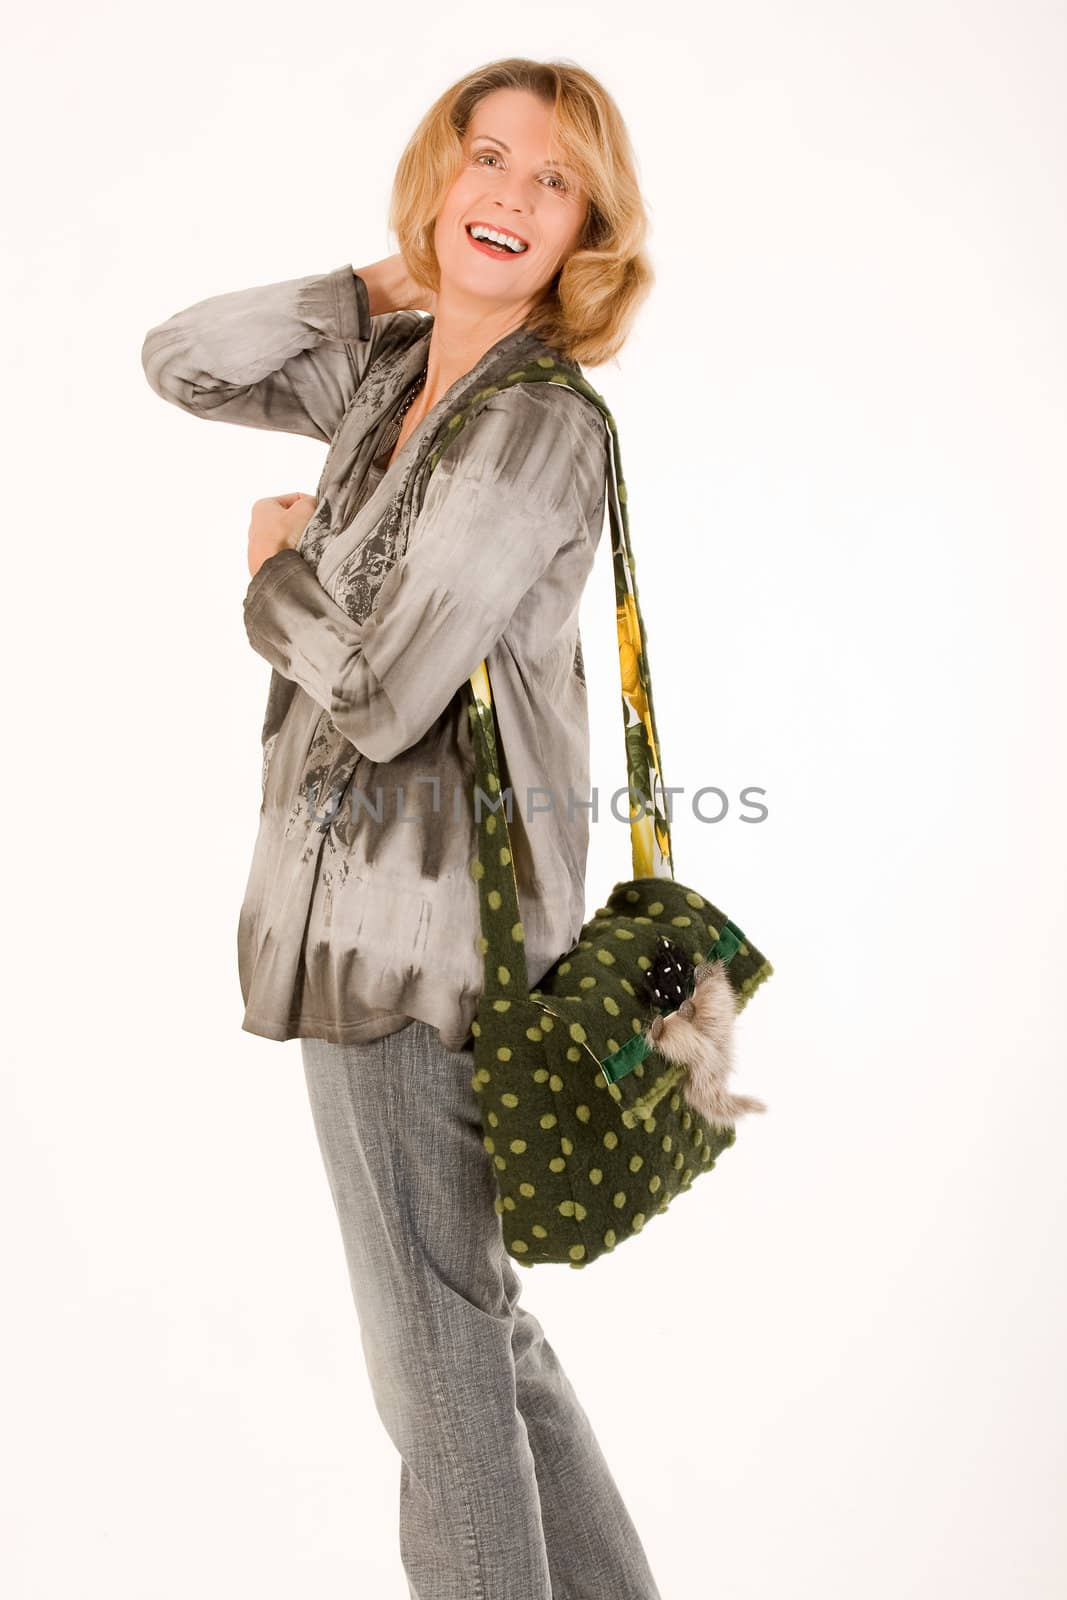 Woman with handbag by STphotography